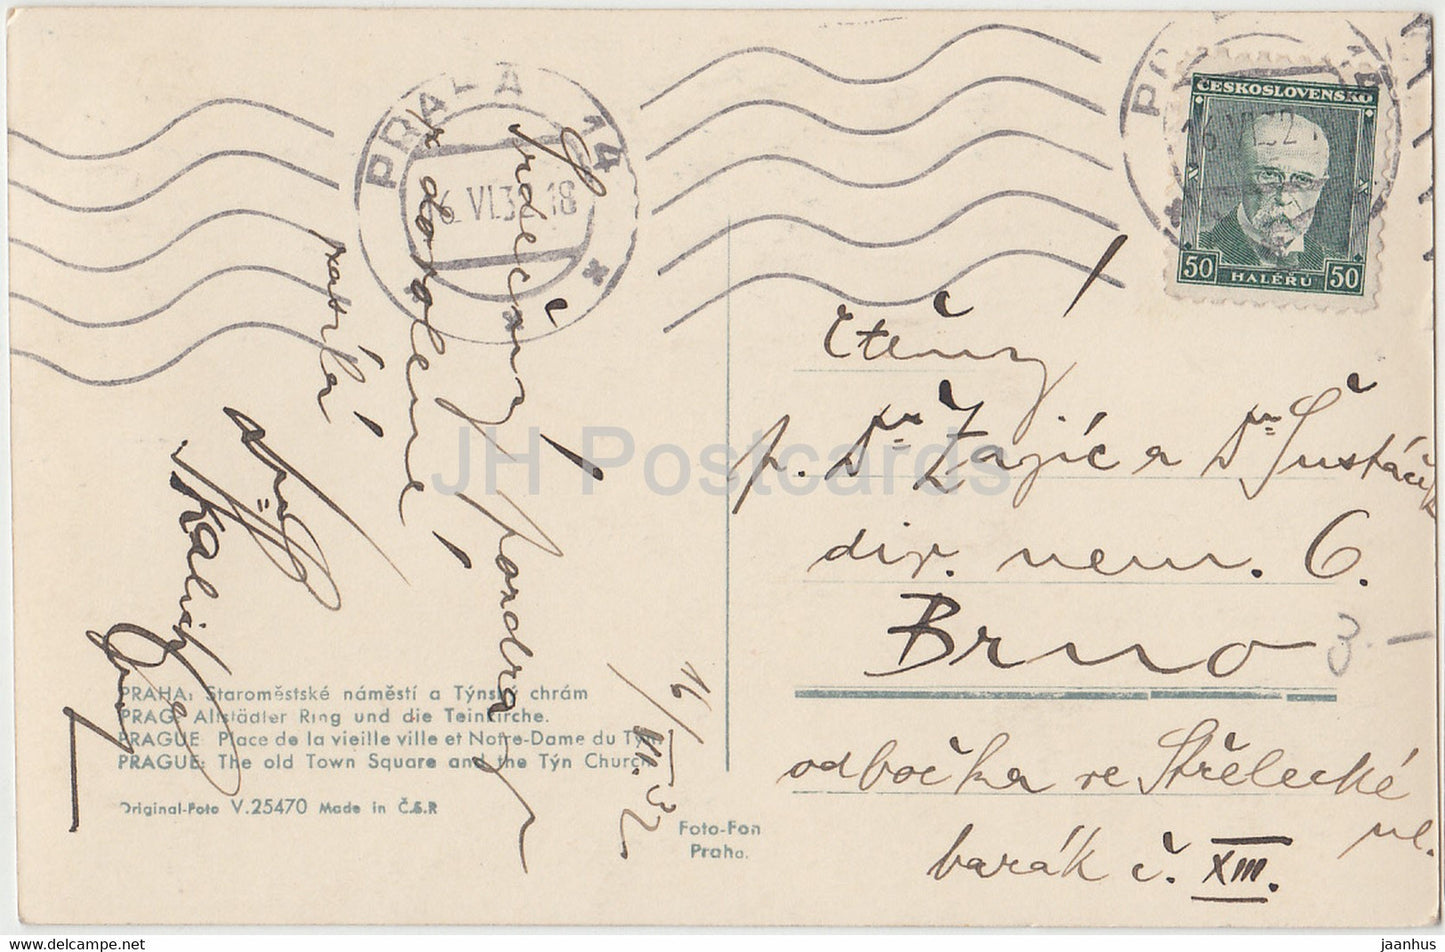 Praha - Prag - Staromestske namesti a Tynsky Chram - alte Postkarte - 1932 - Tschechoslowakei - Tschechische Republik - gebraucht